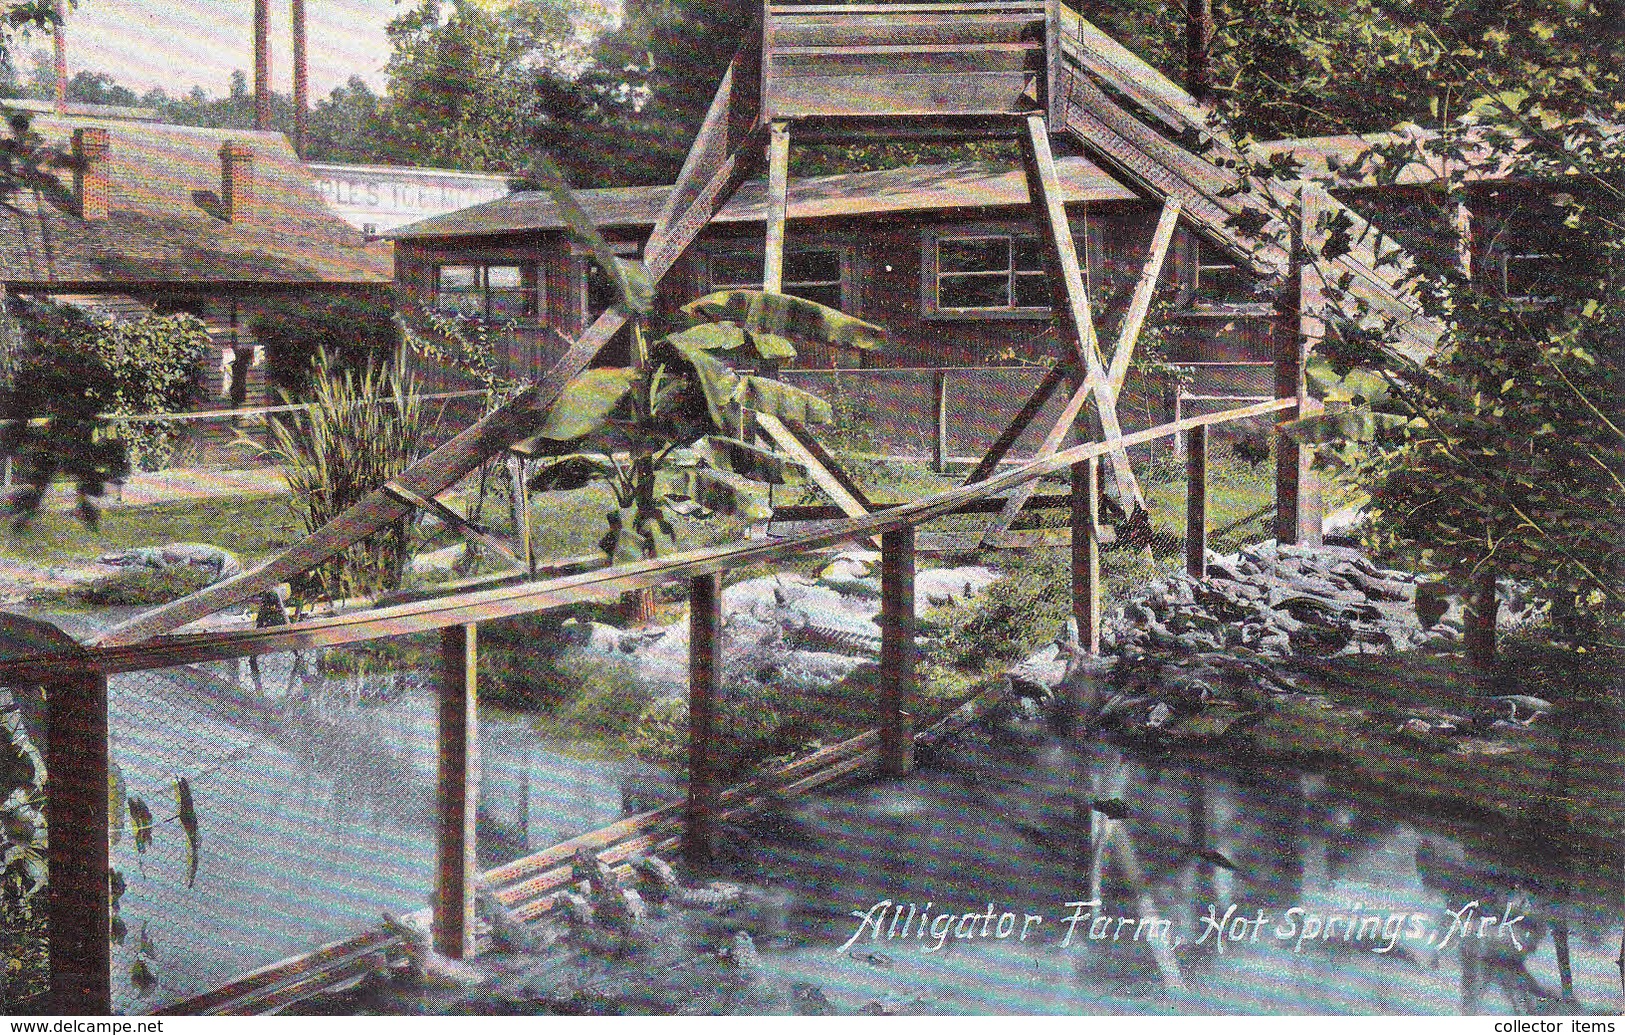 Hot Springs, Arkansas, Alligator Farm - Hot Springs